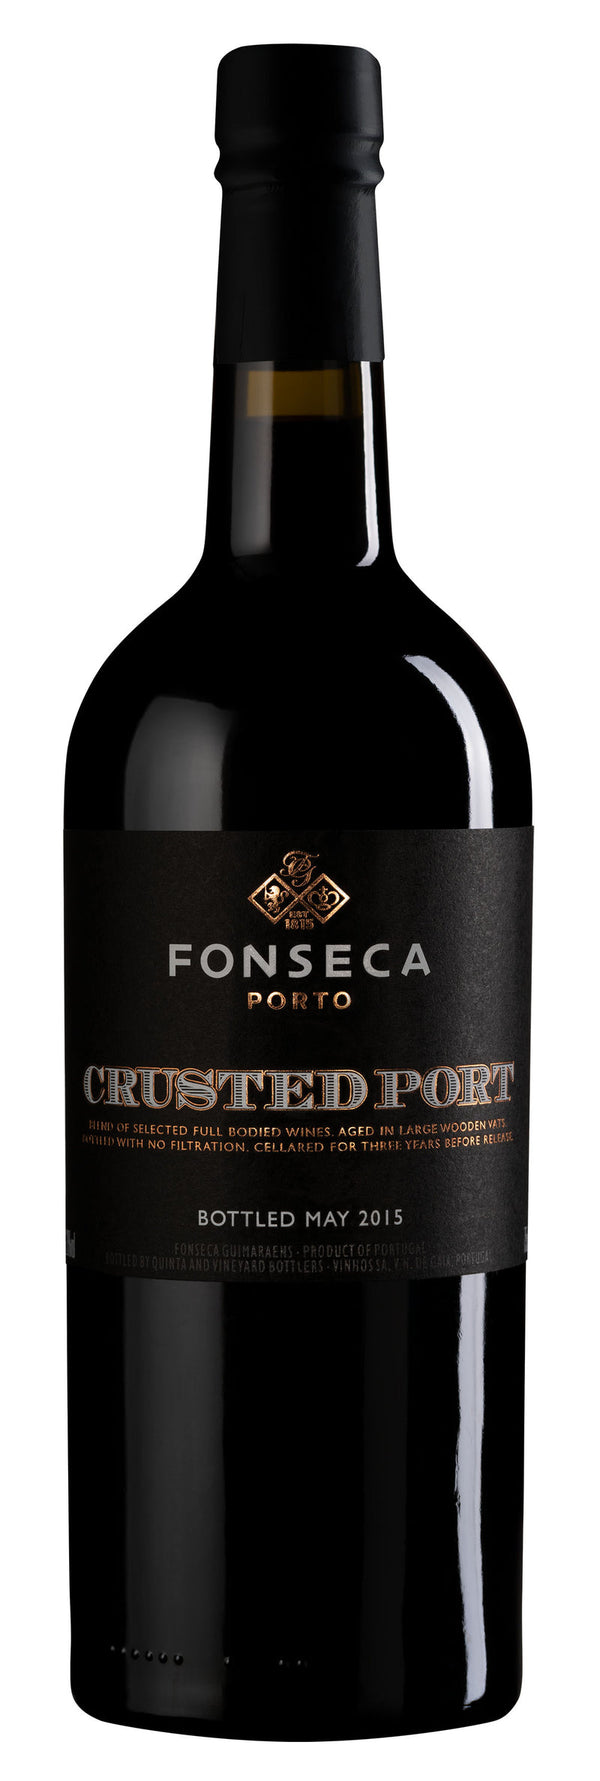 Fonseca, Crusted Port, NV Bottle